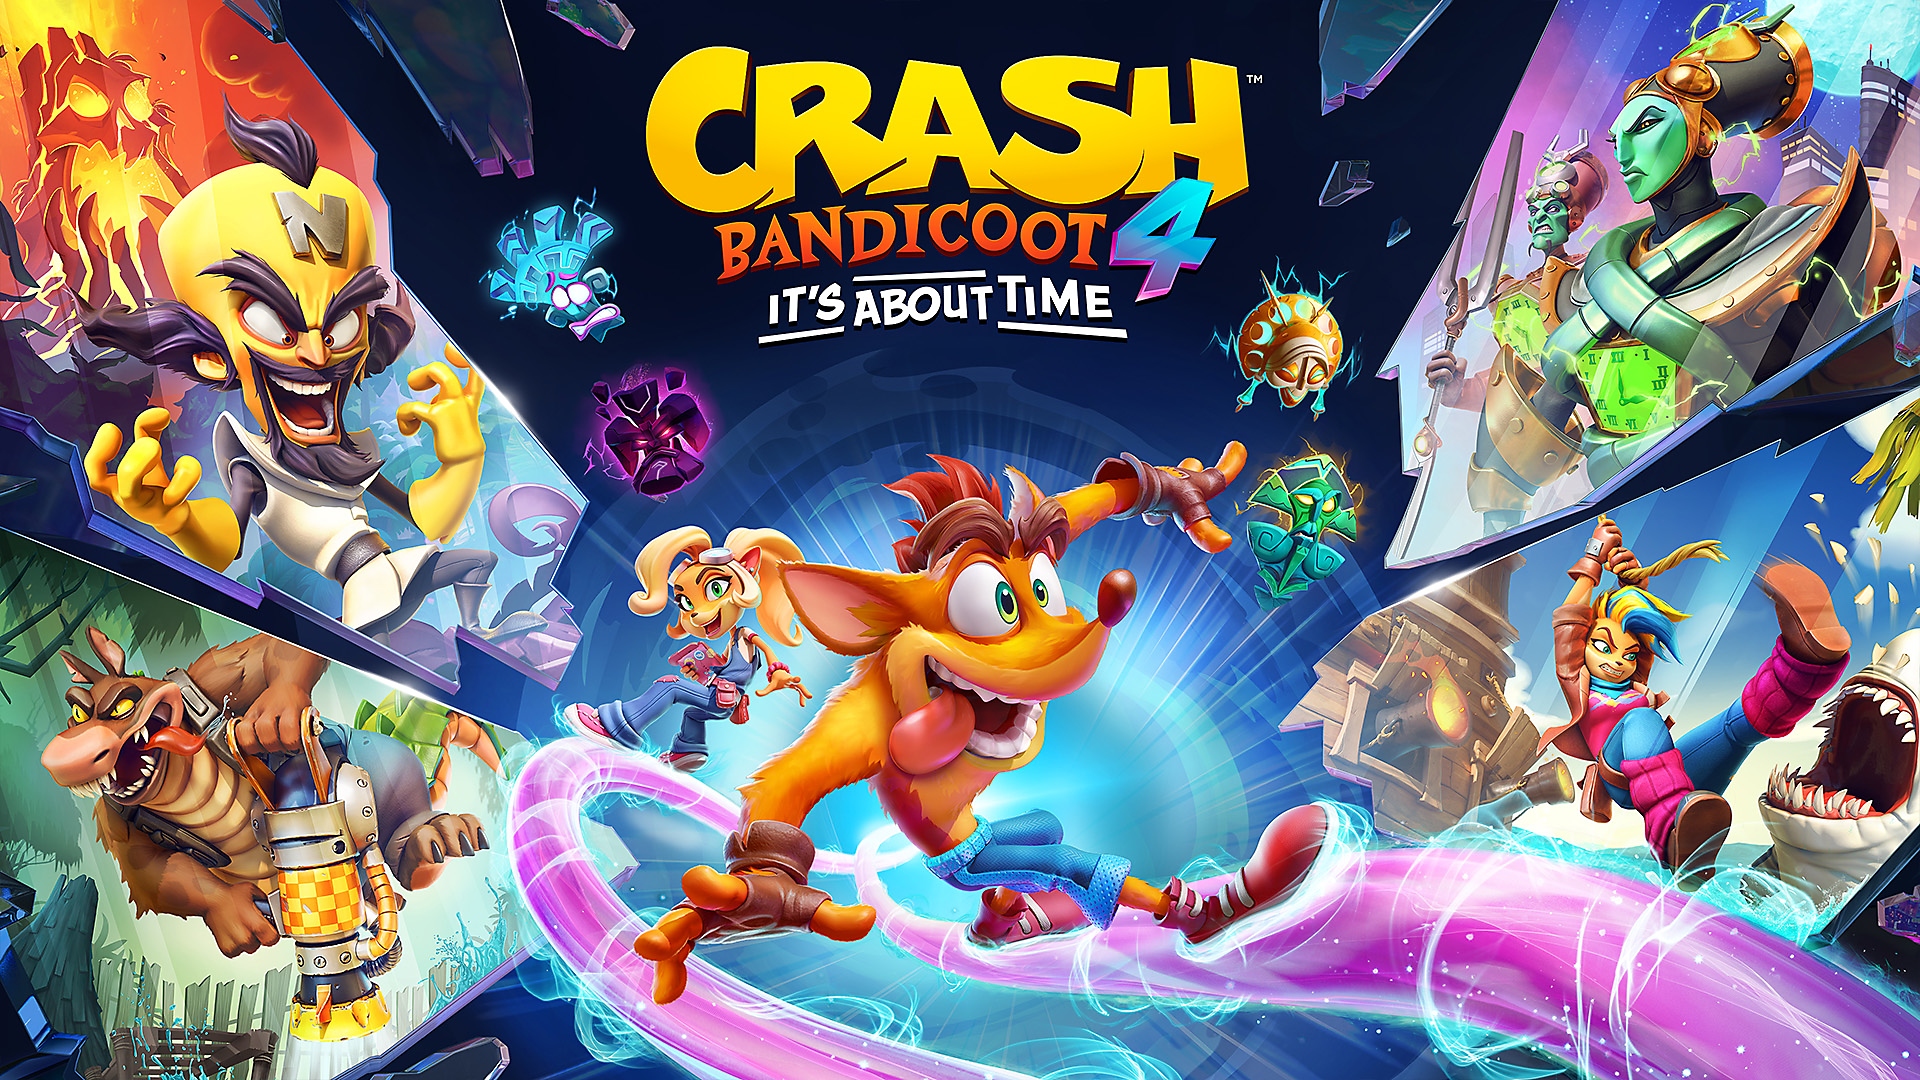 Crash Bandicoot 4: trailer di lancio